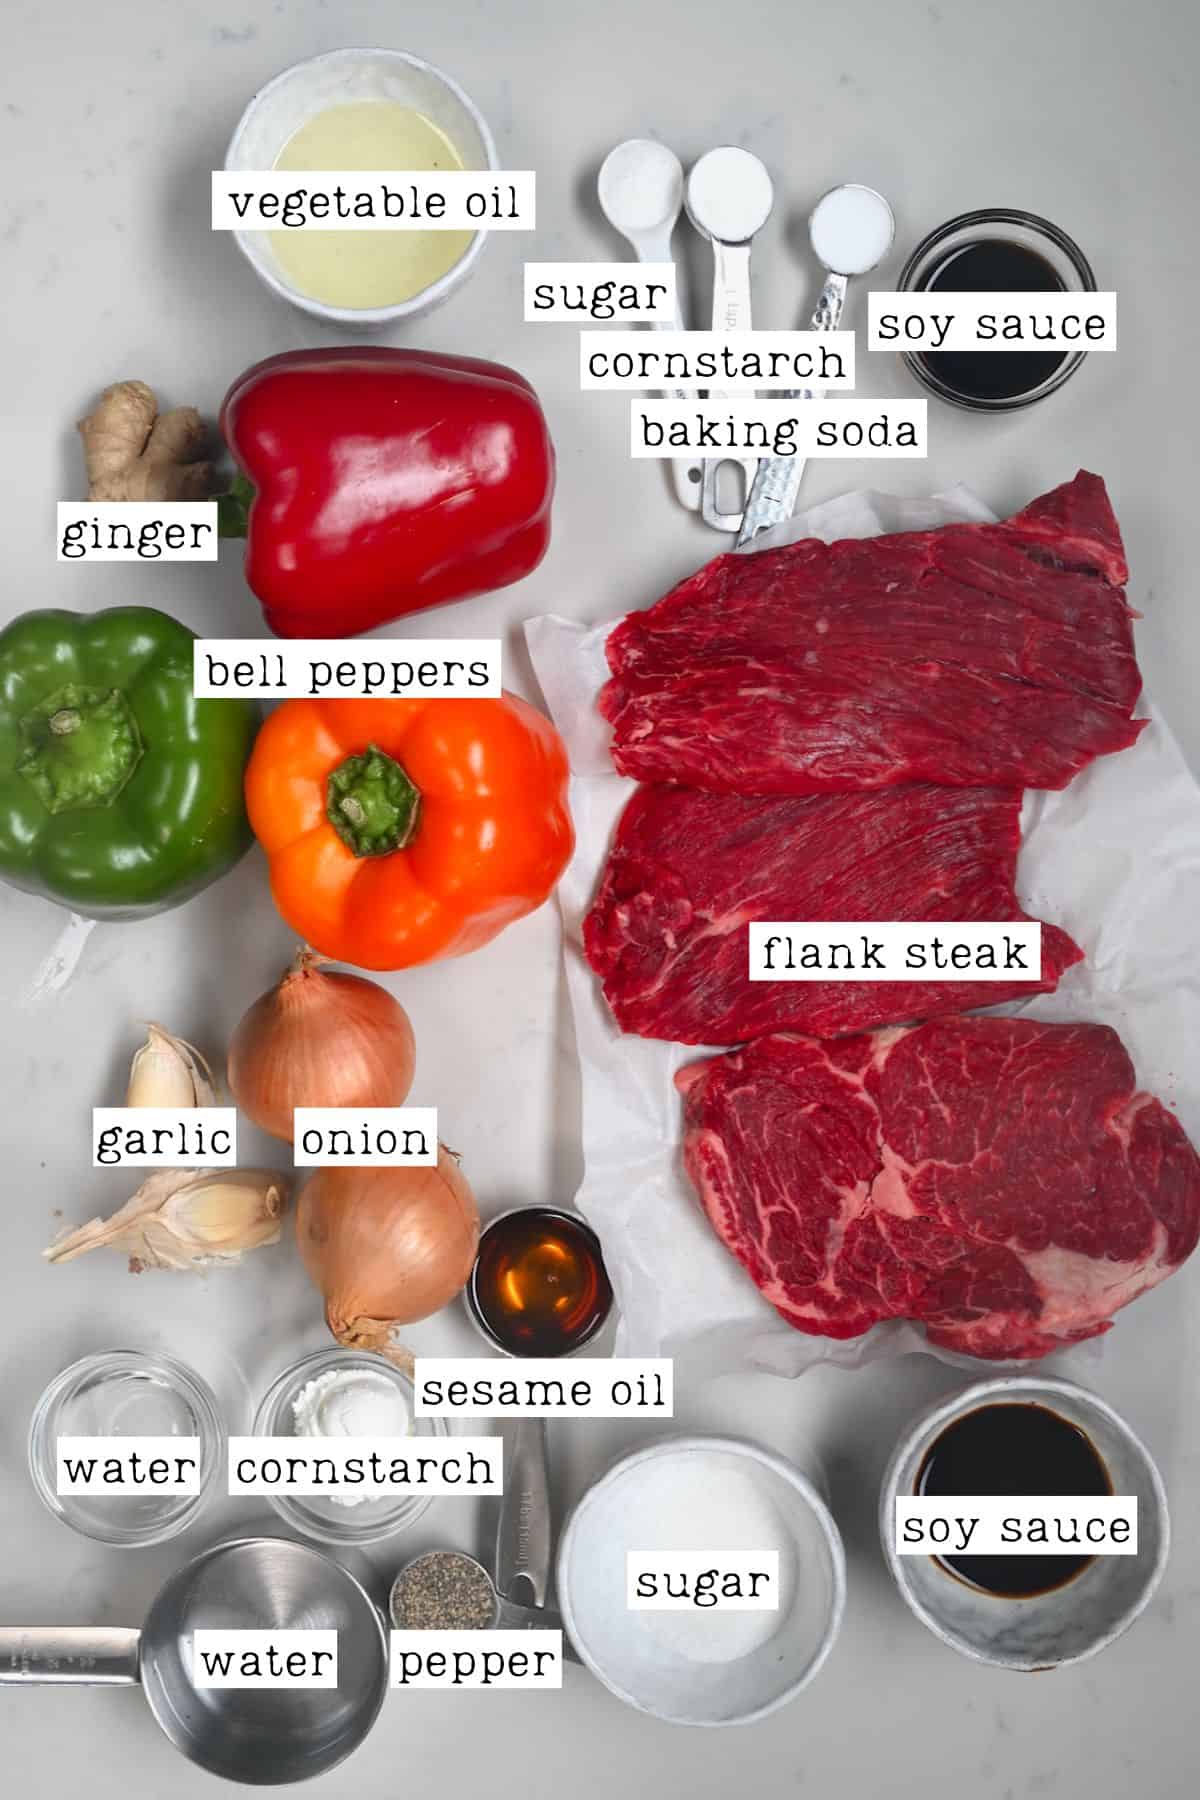 Ingredients for pepper steak